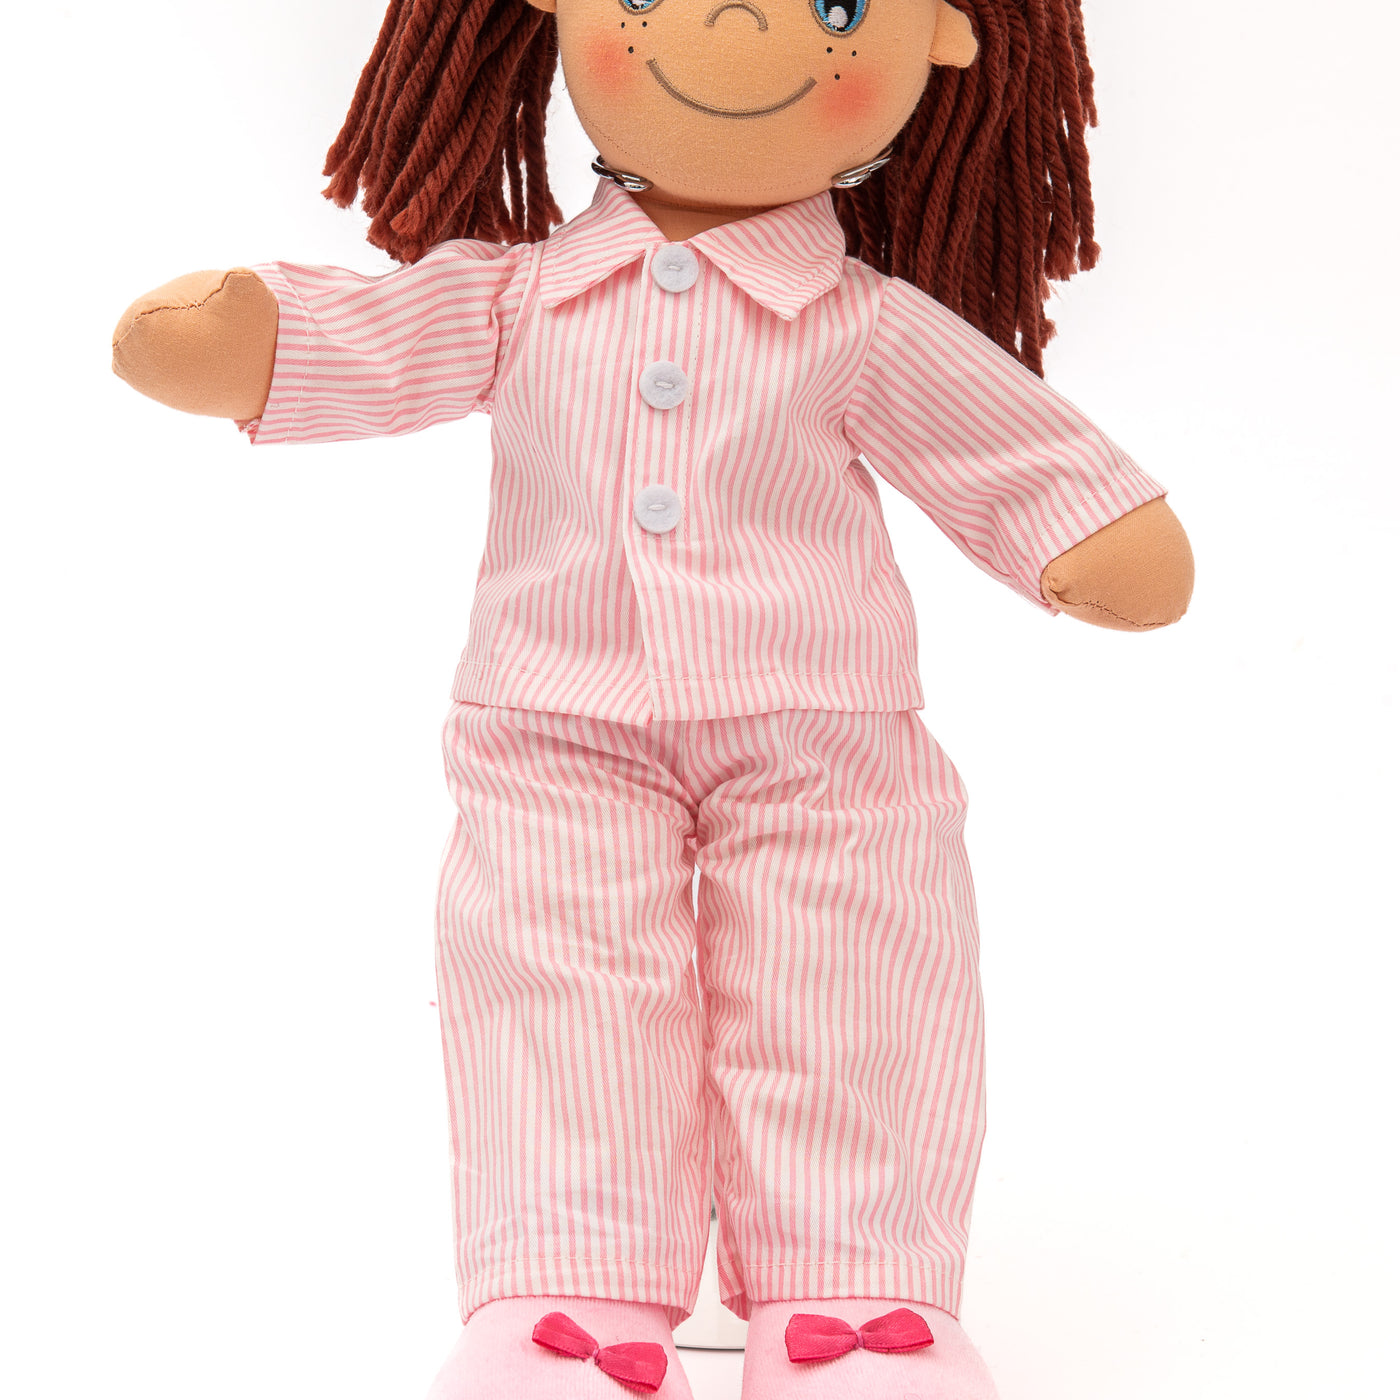 Rag Doll Pyjamas - Pink and White Stripe